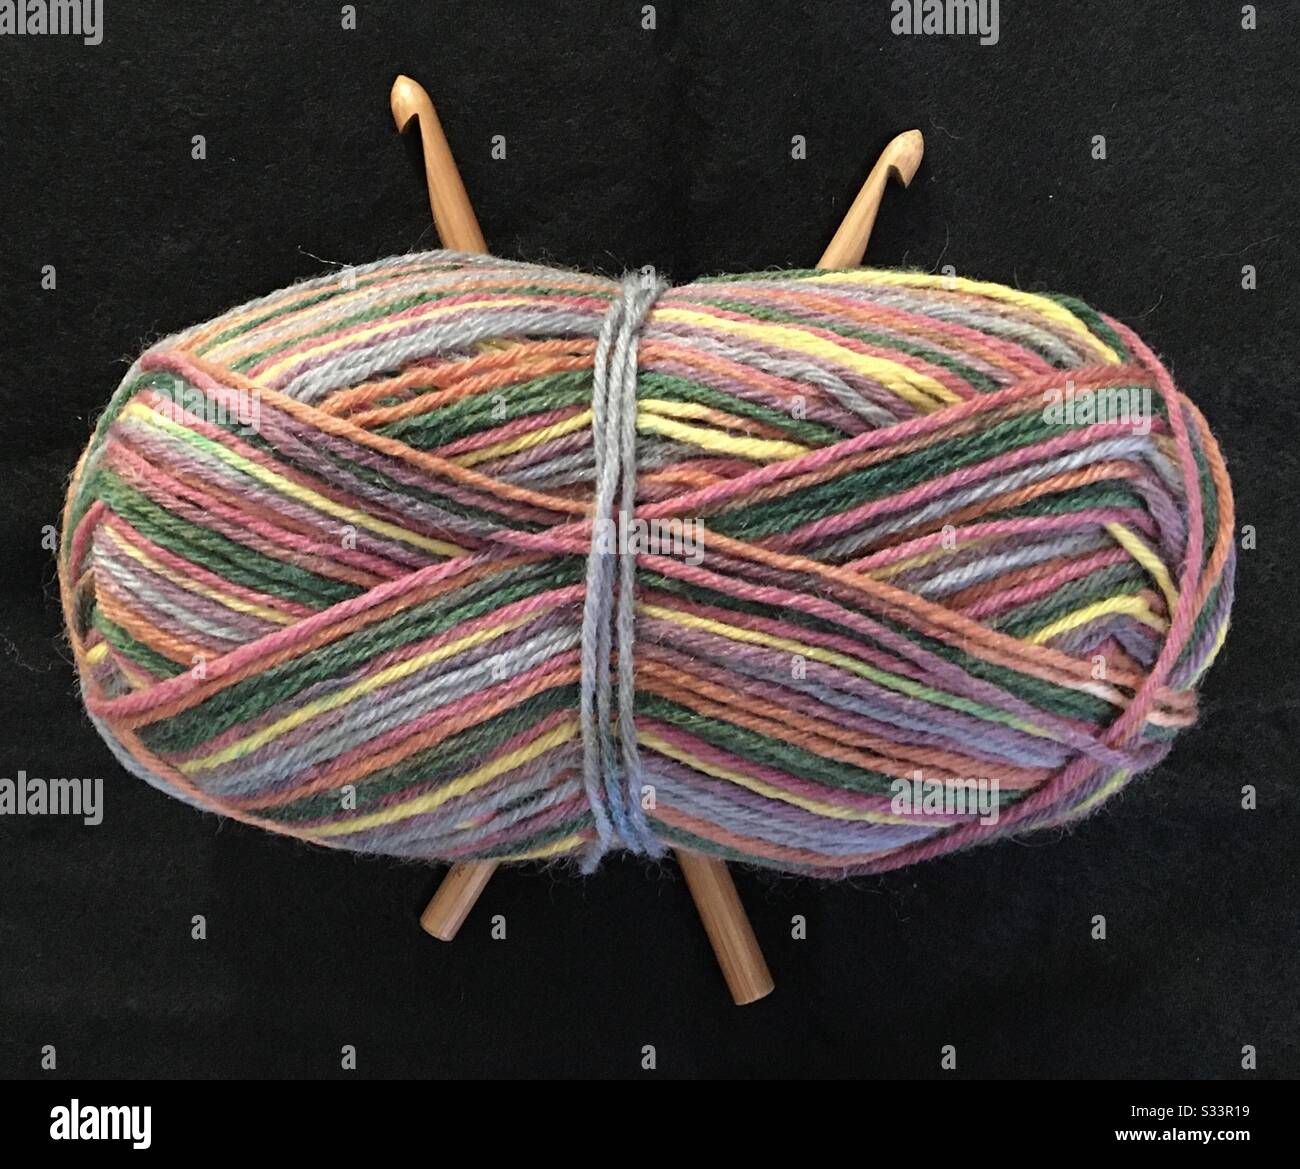 Ball of yarn with crochet hooks Stock Photo